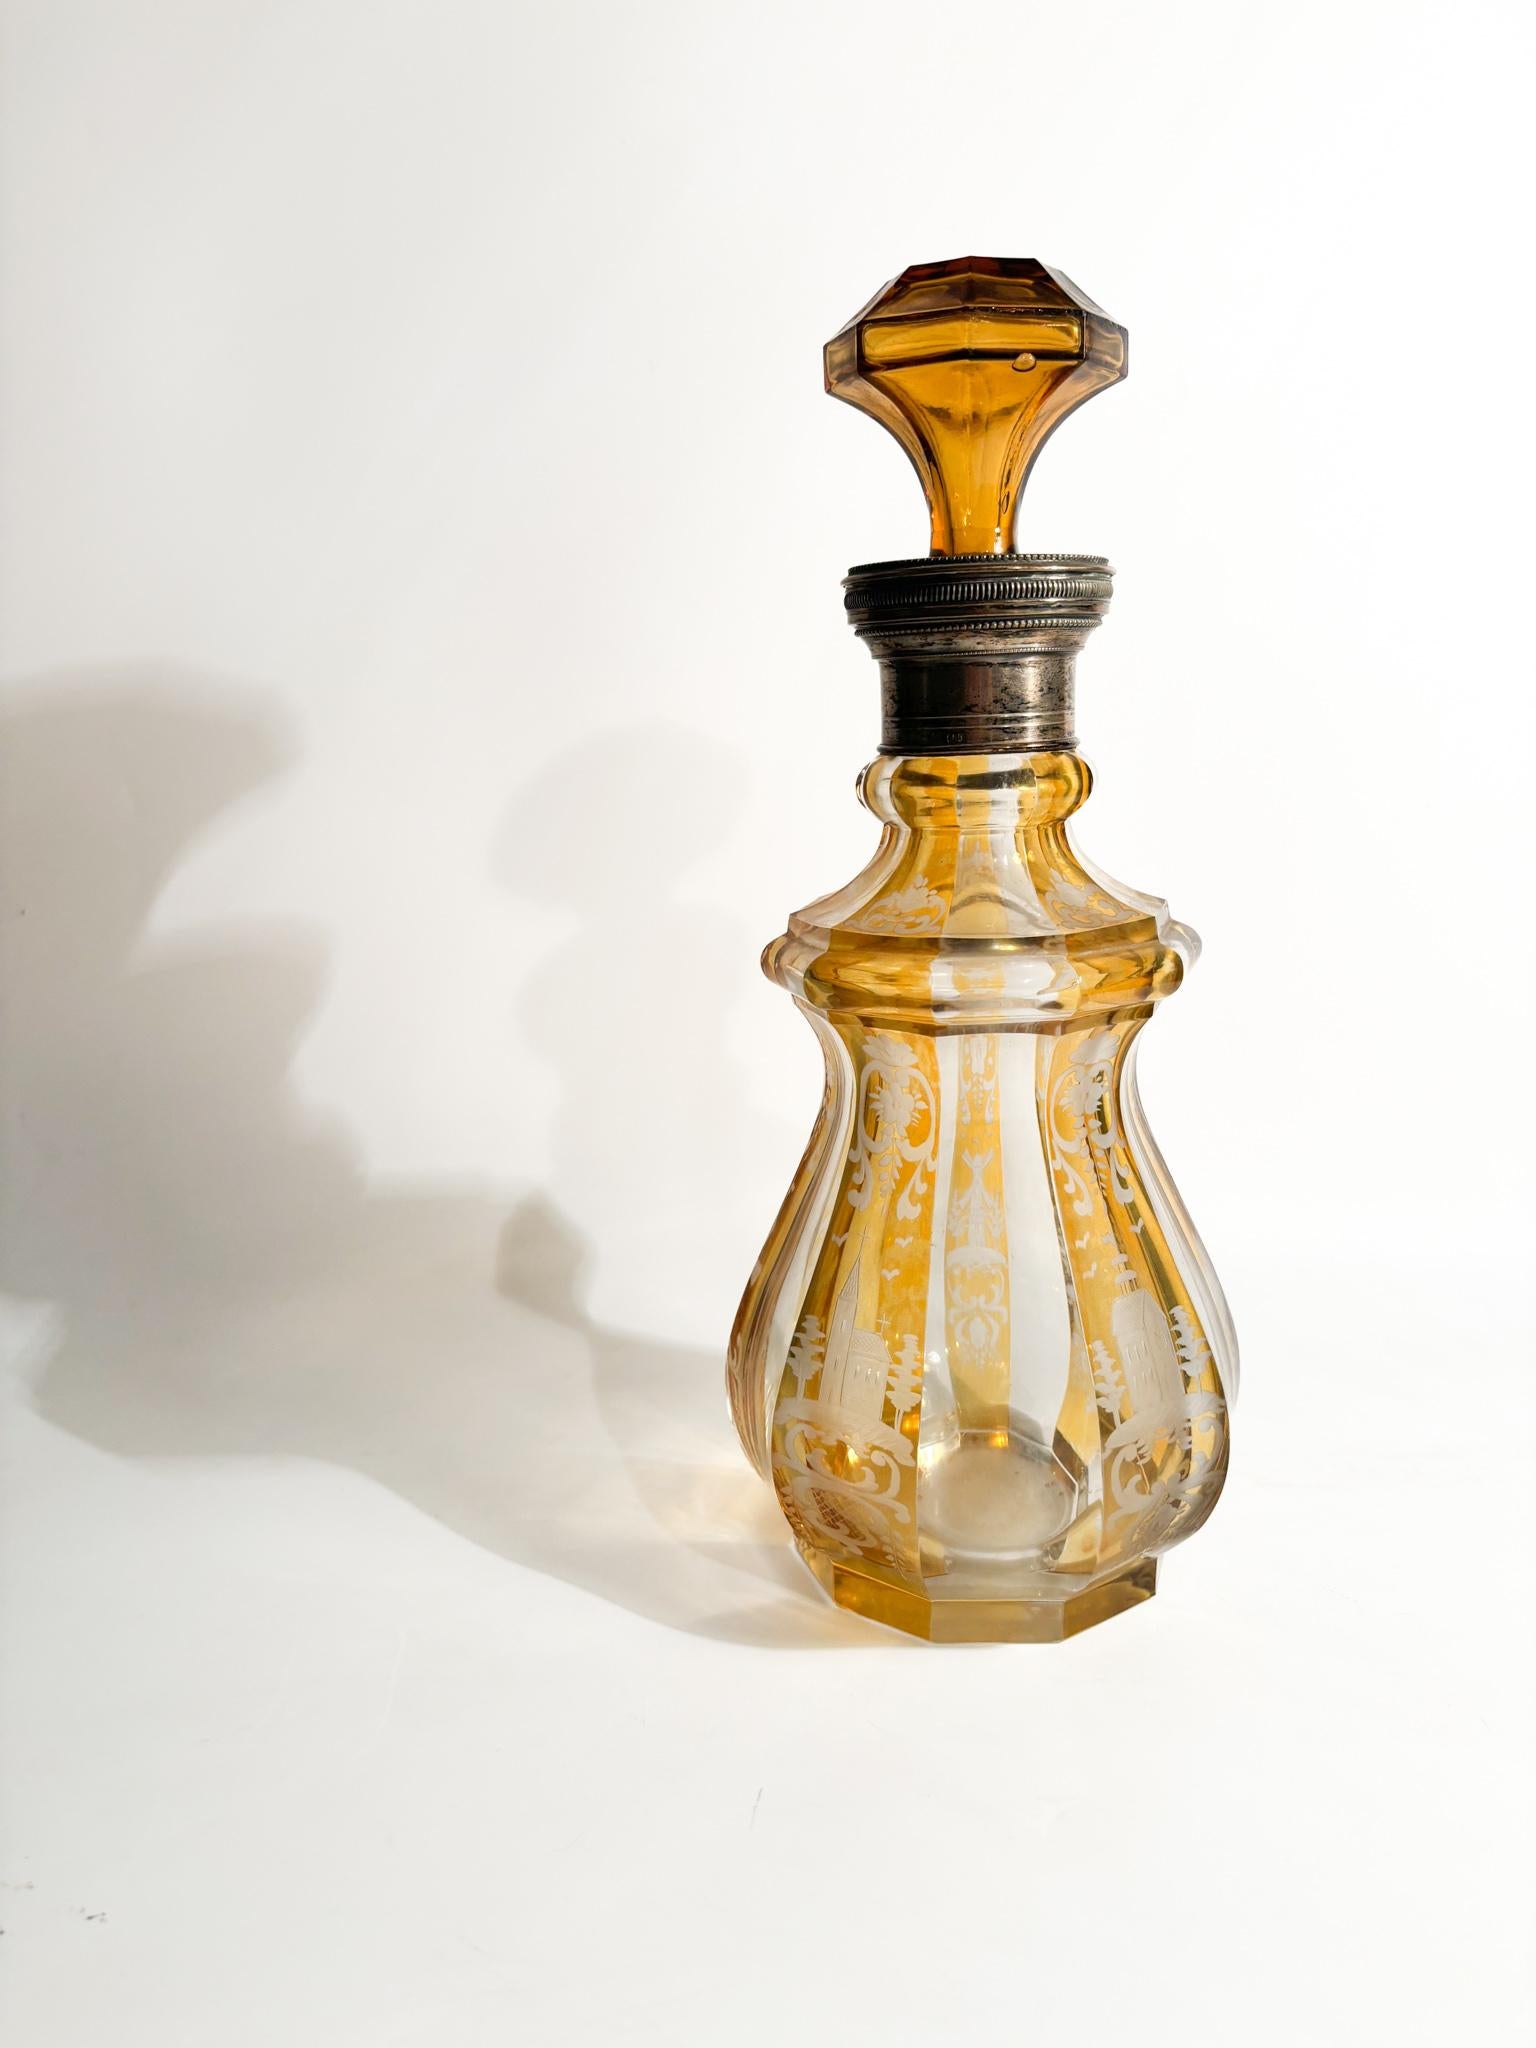 German Orange and Silver Biedermeier Crystal Bottle from 1800